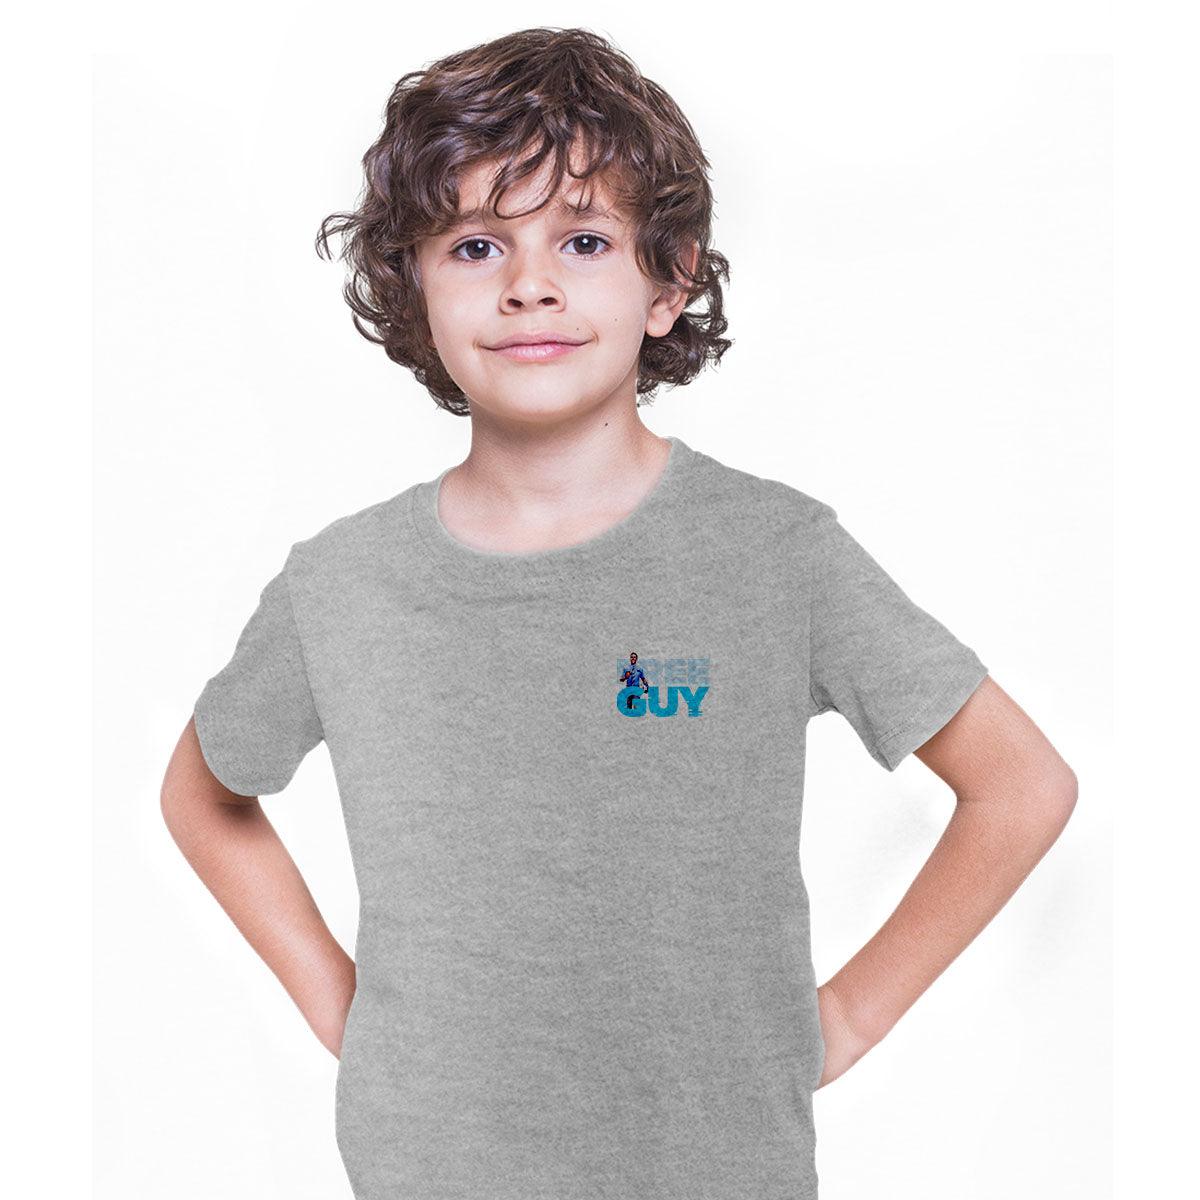 Free Guy Movie Pocket Size Tee Typography T-shirt for Kids - Kuzi Tees